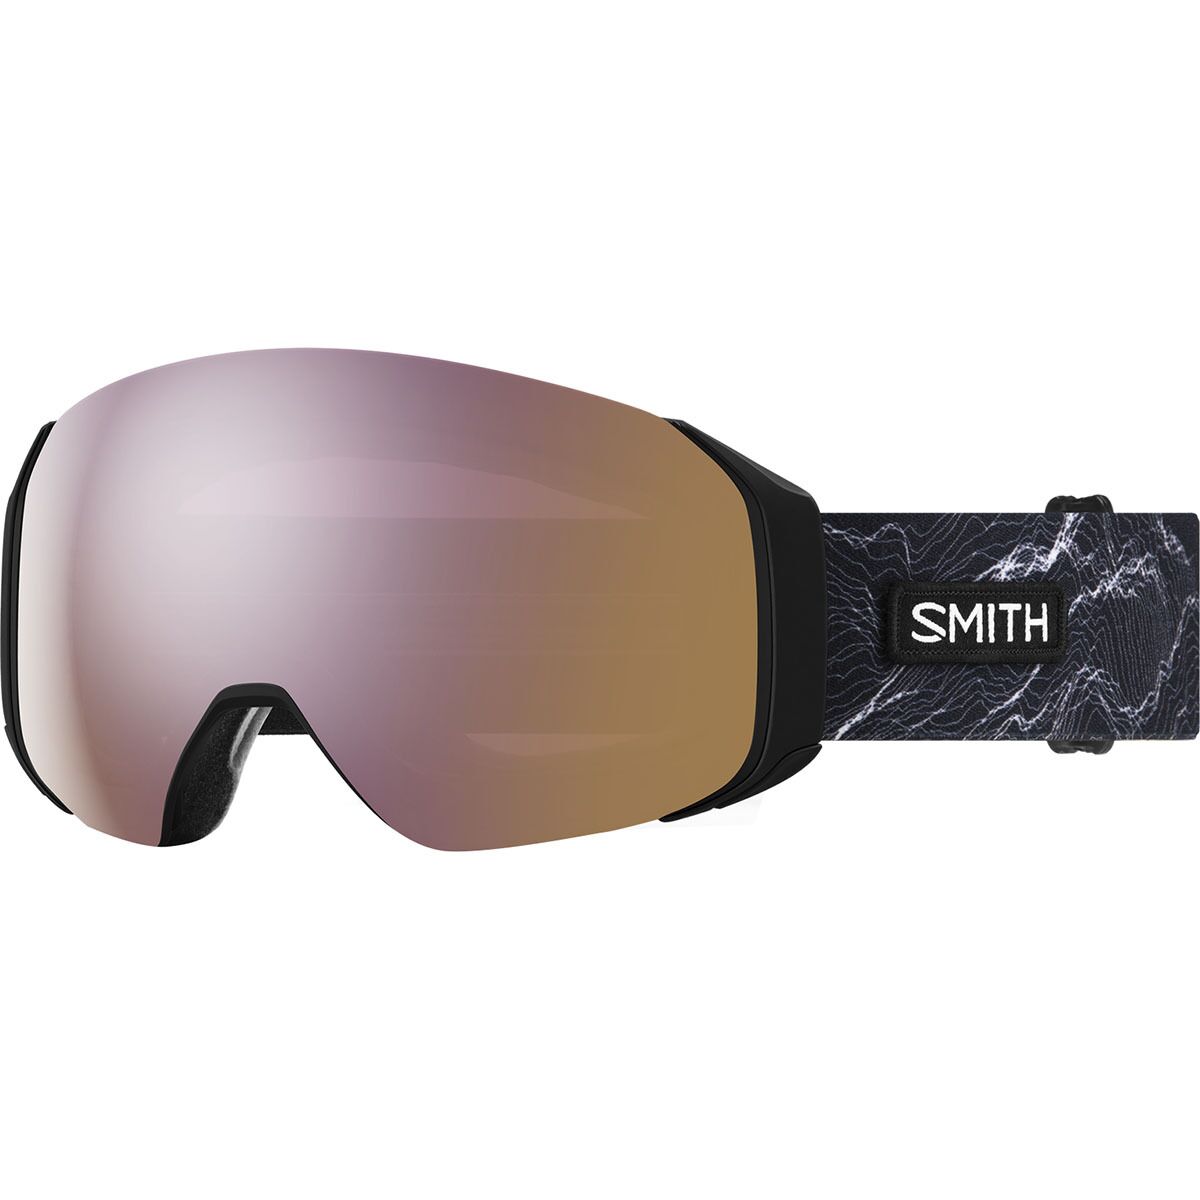 Smith 4D MAG S Low Bridge Fit Goggles - Women's